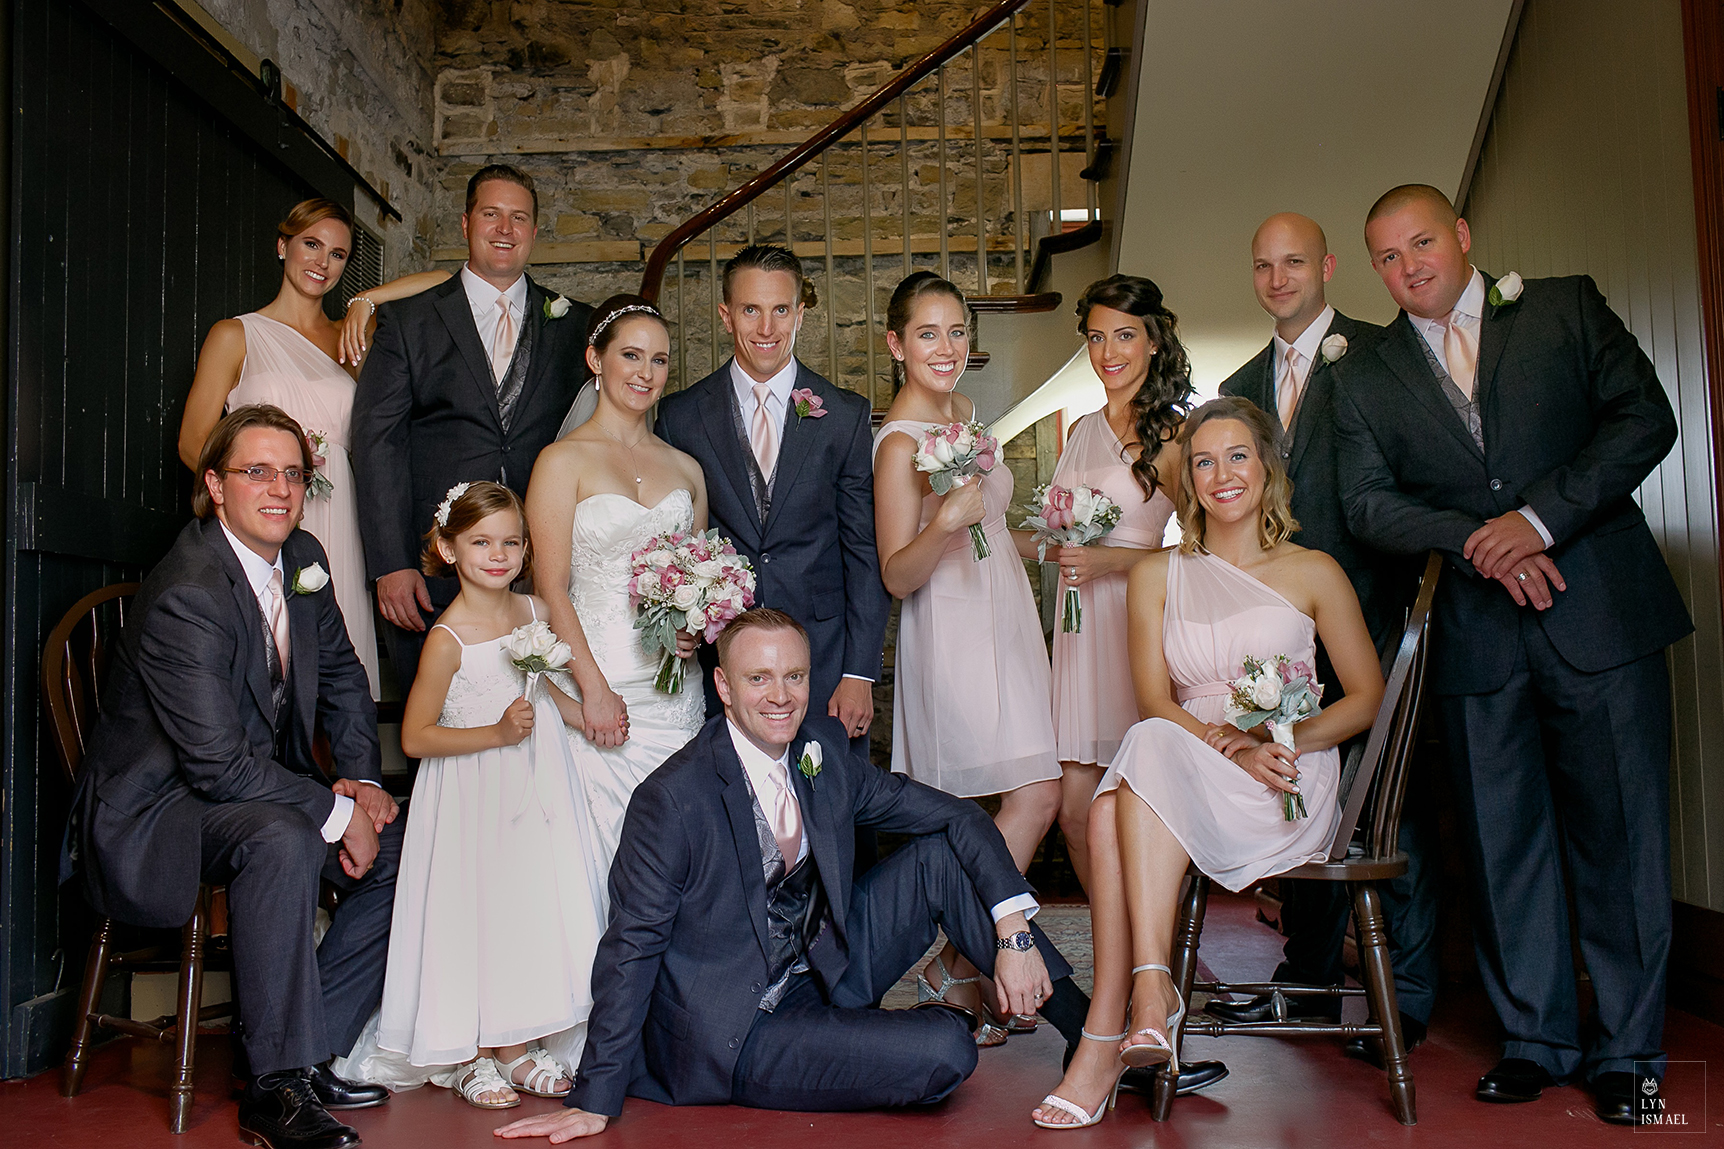 Wedding party portrait in Dundurn Castle.